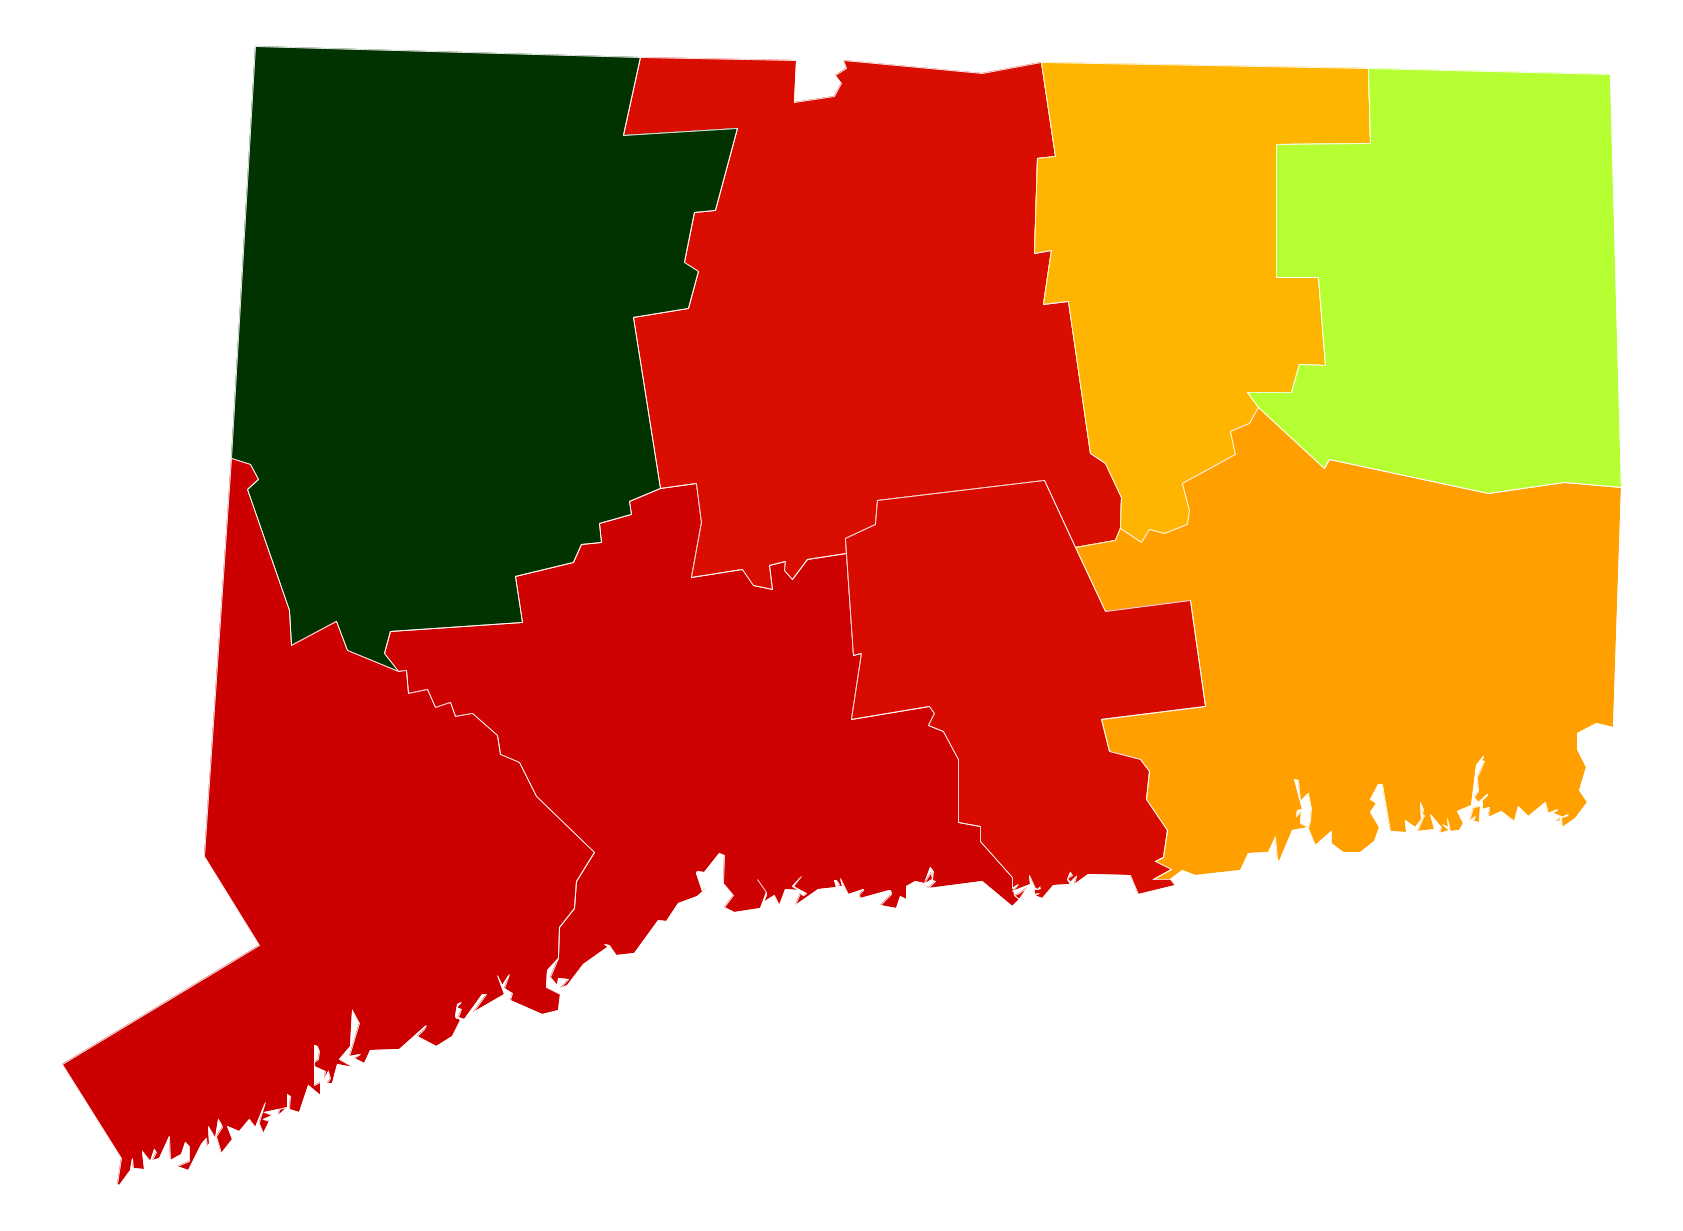 Connecticut Population Density